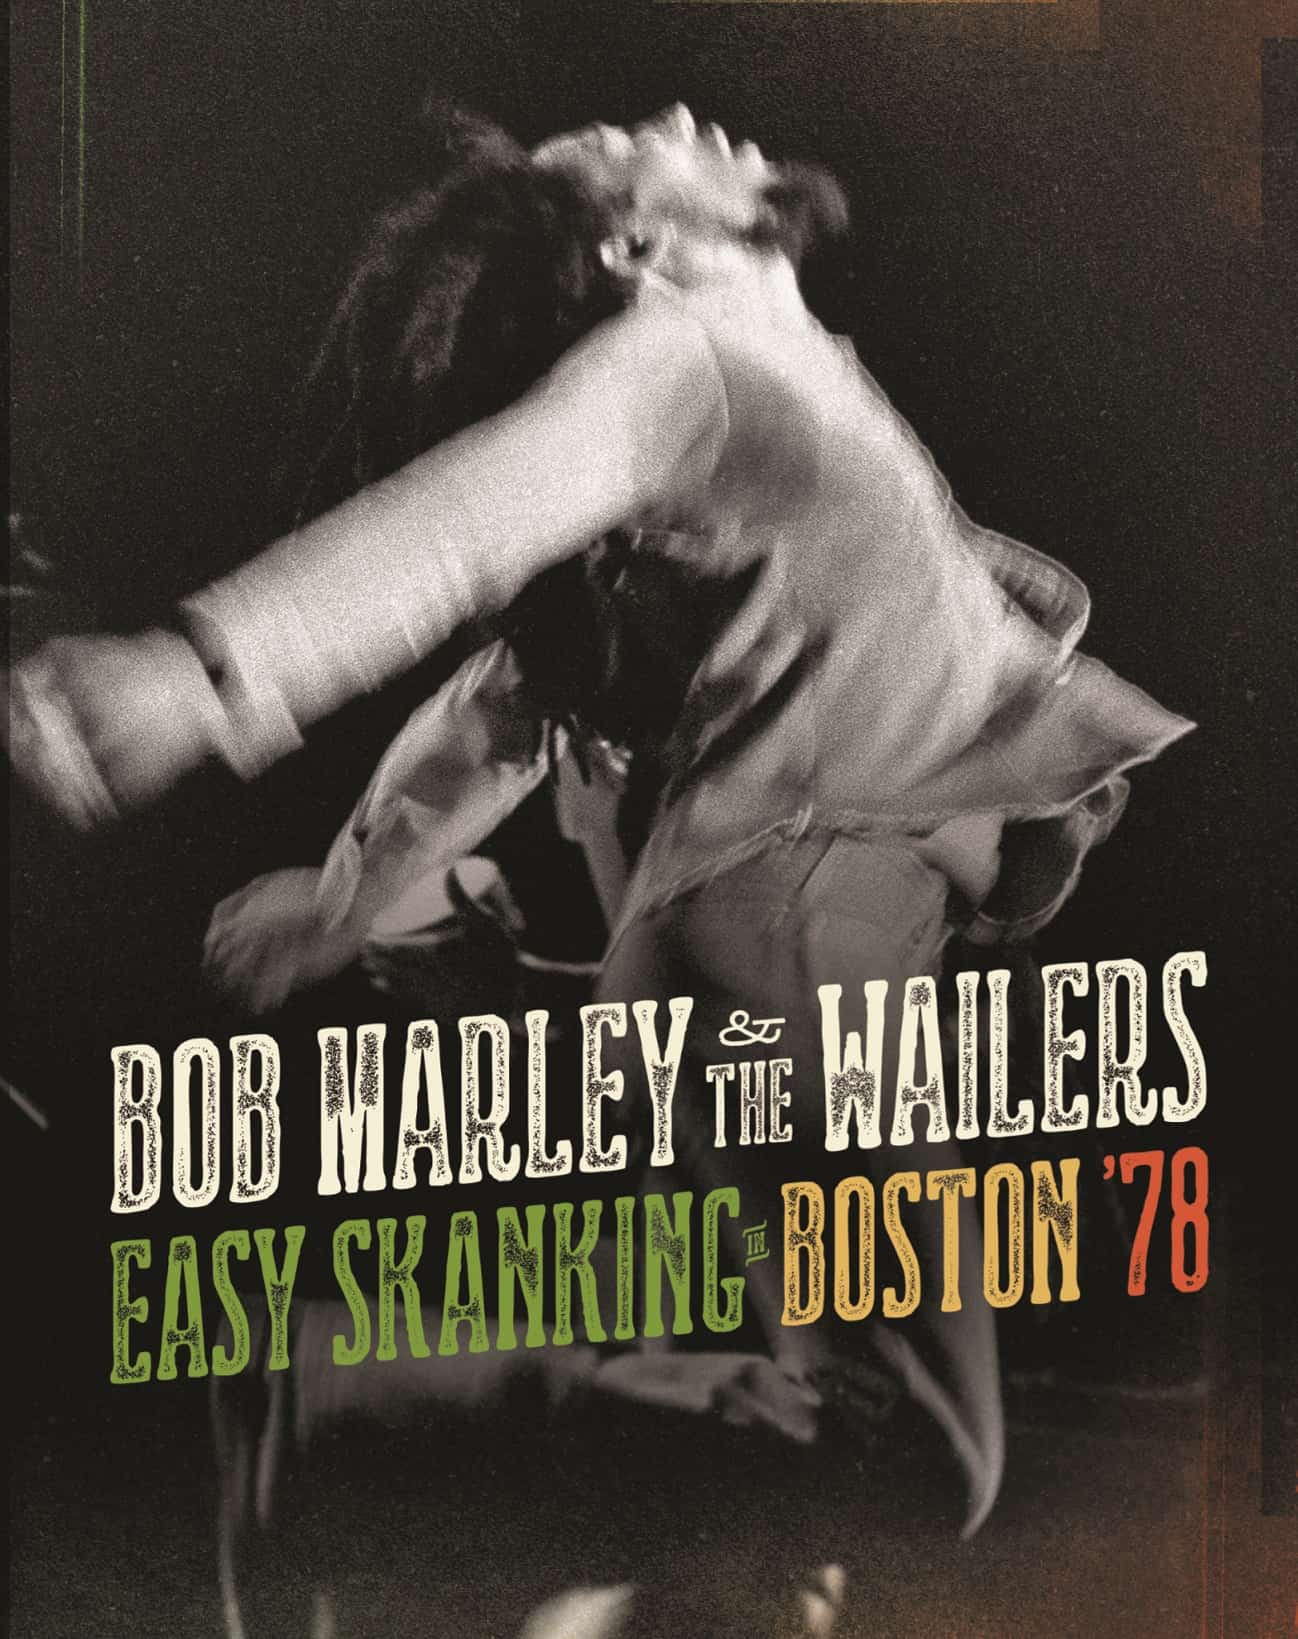 Bob Marleya & The Wailers Easy Skanking in Boston ‘78 już 17 lutego!